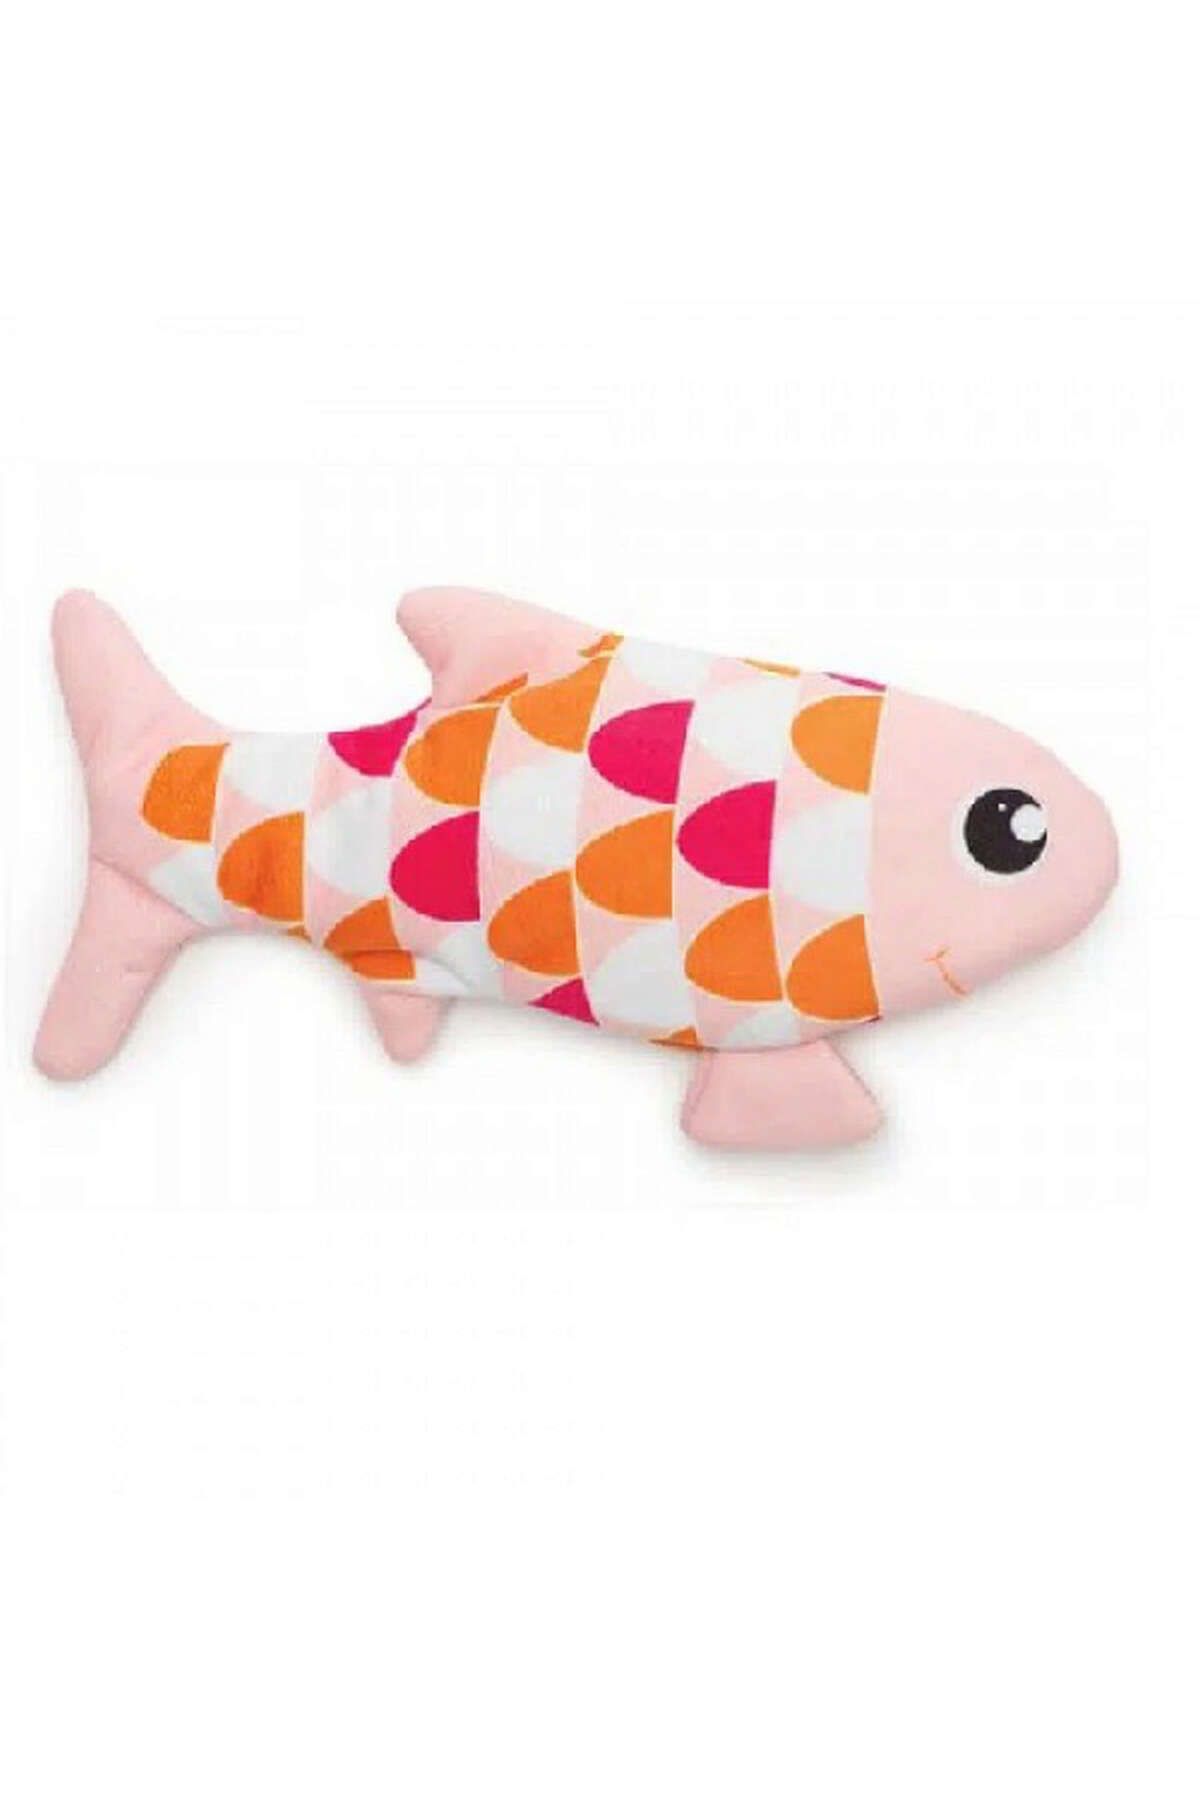 Hagen Groovy Fish Catnipli Kedi Oyuncağı, Pembe 336108